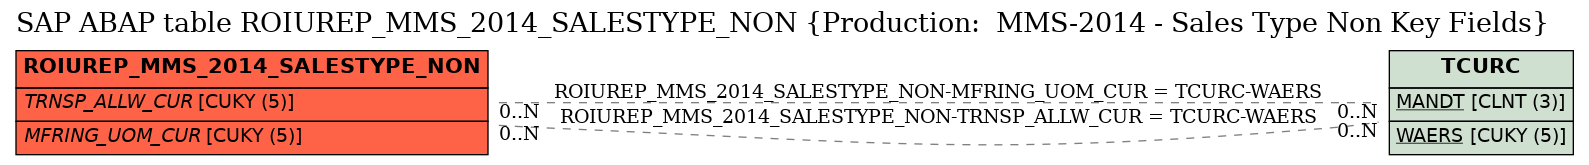 E-R Diagram for table ROIUREP_MMS_2014_SALESTYPE_NON (Production:  MMS-2014 - Sales Type Non Key Fields)